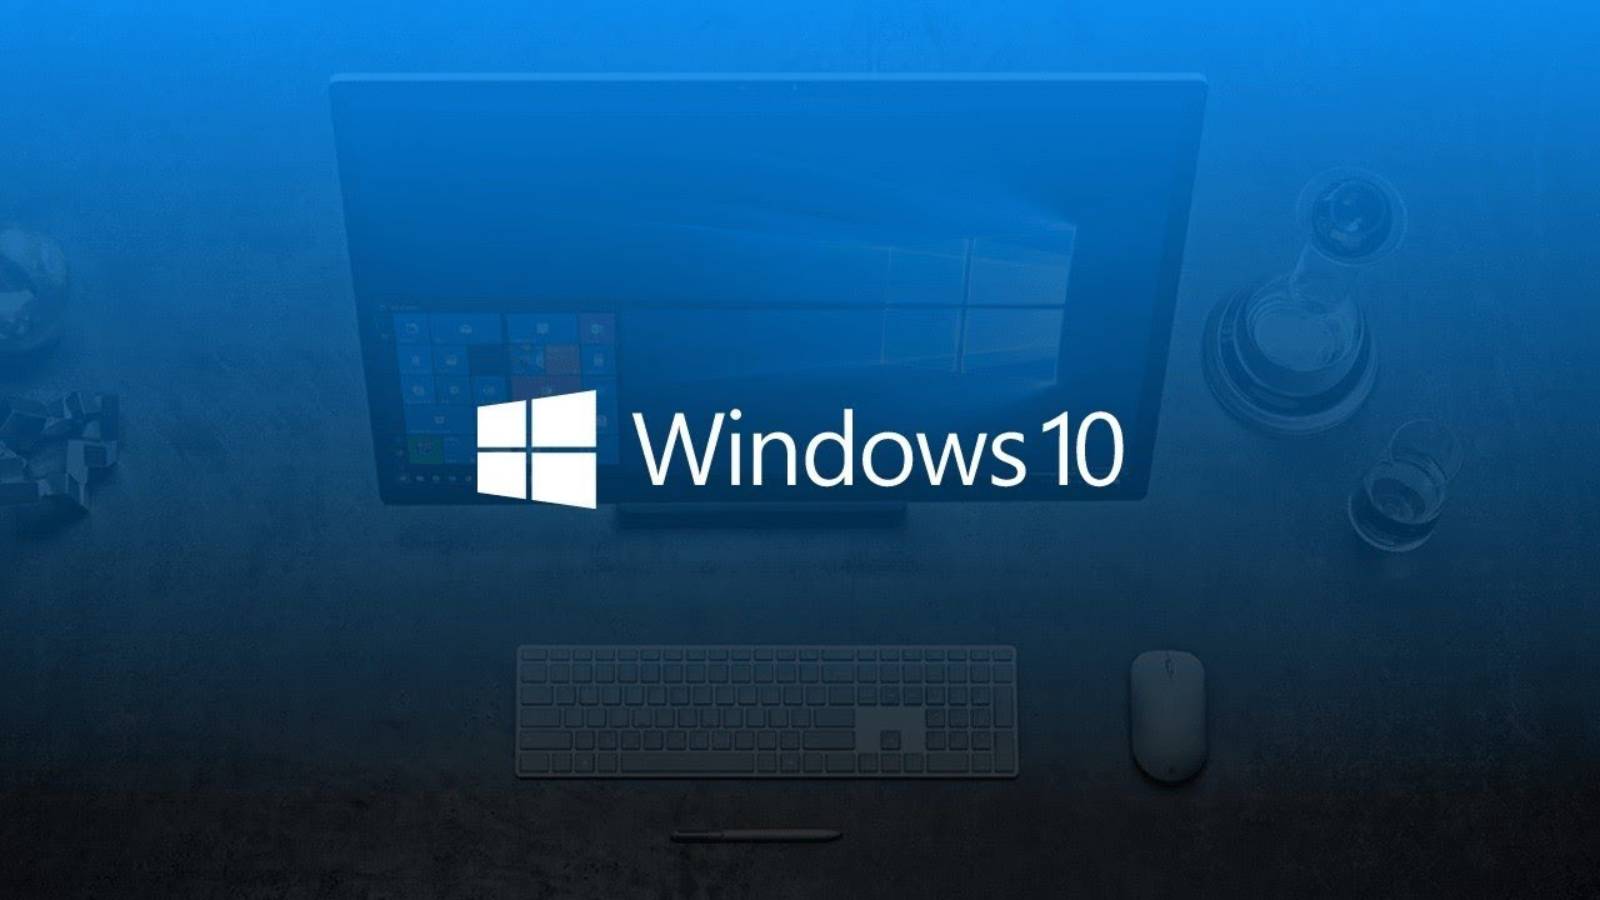 Windows 10 repairs